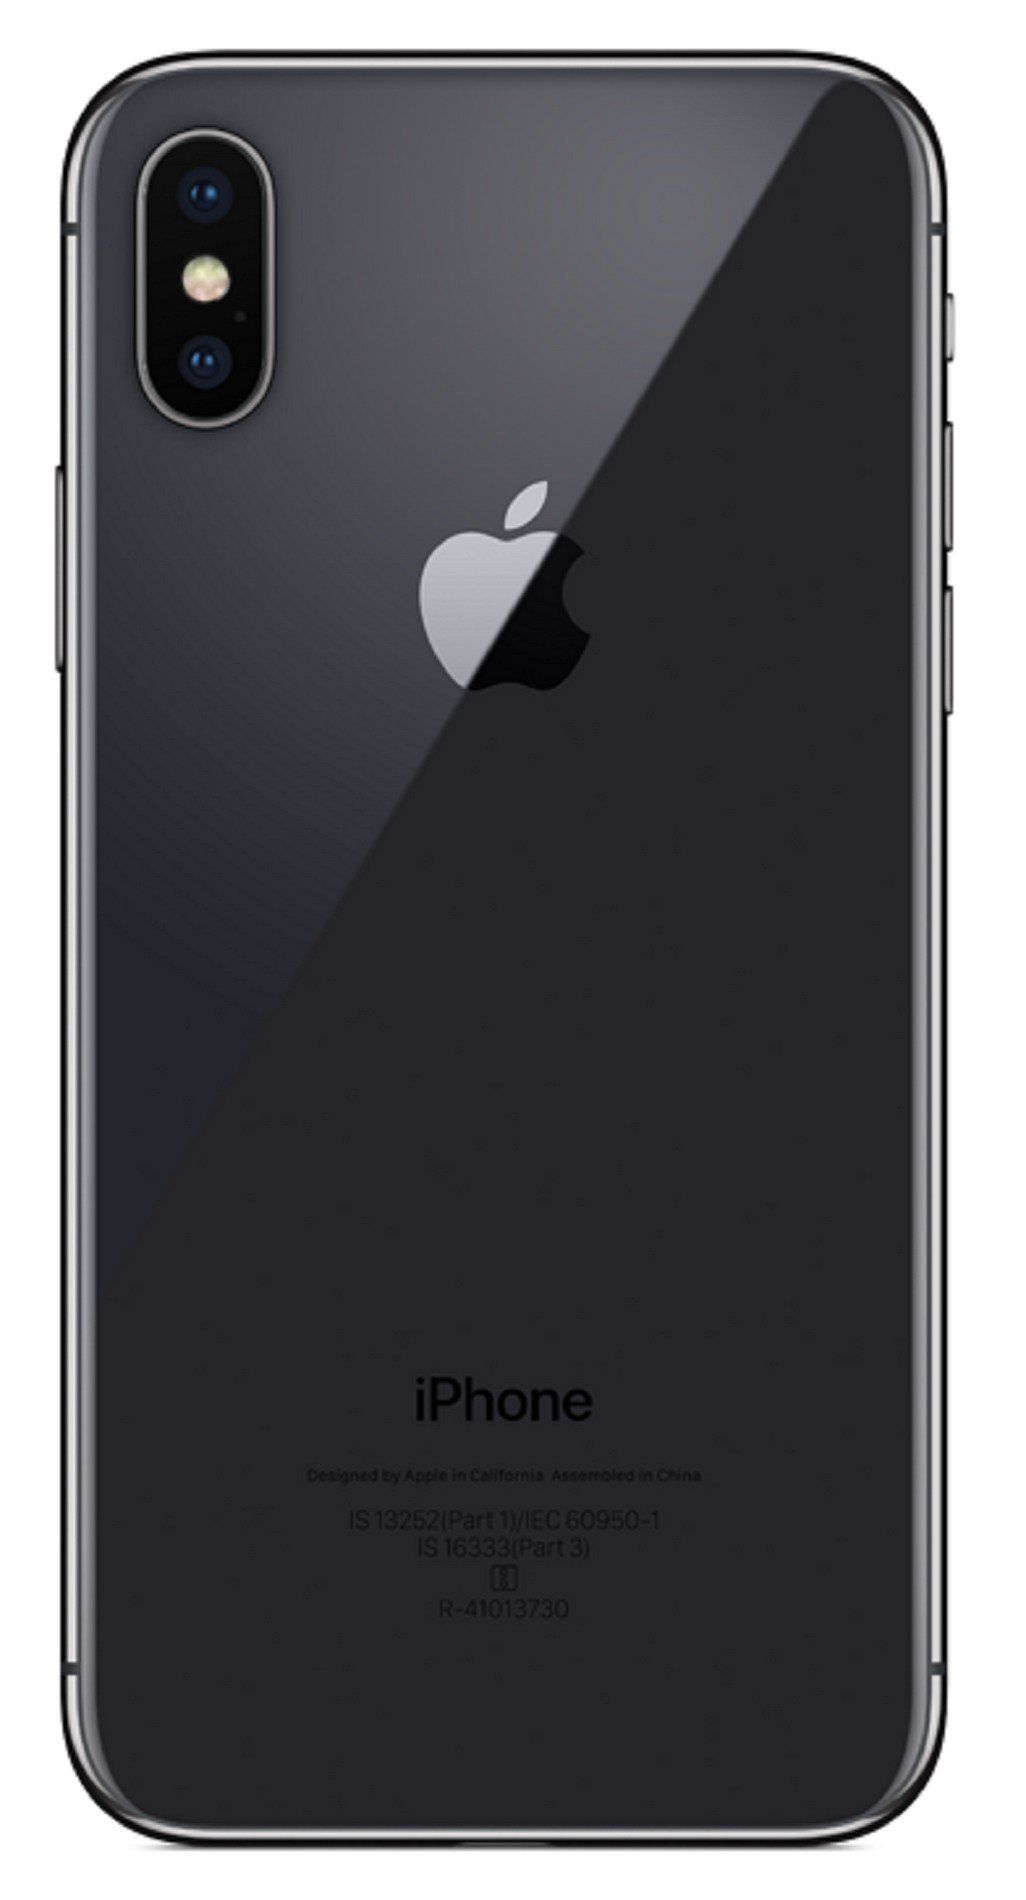 Apple iPhone X (Space Grey, 3GB RAM, 64GB Storage) - Pack of 10 